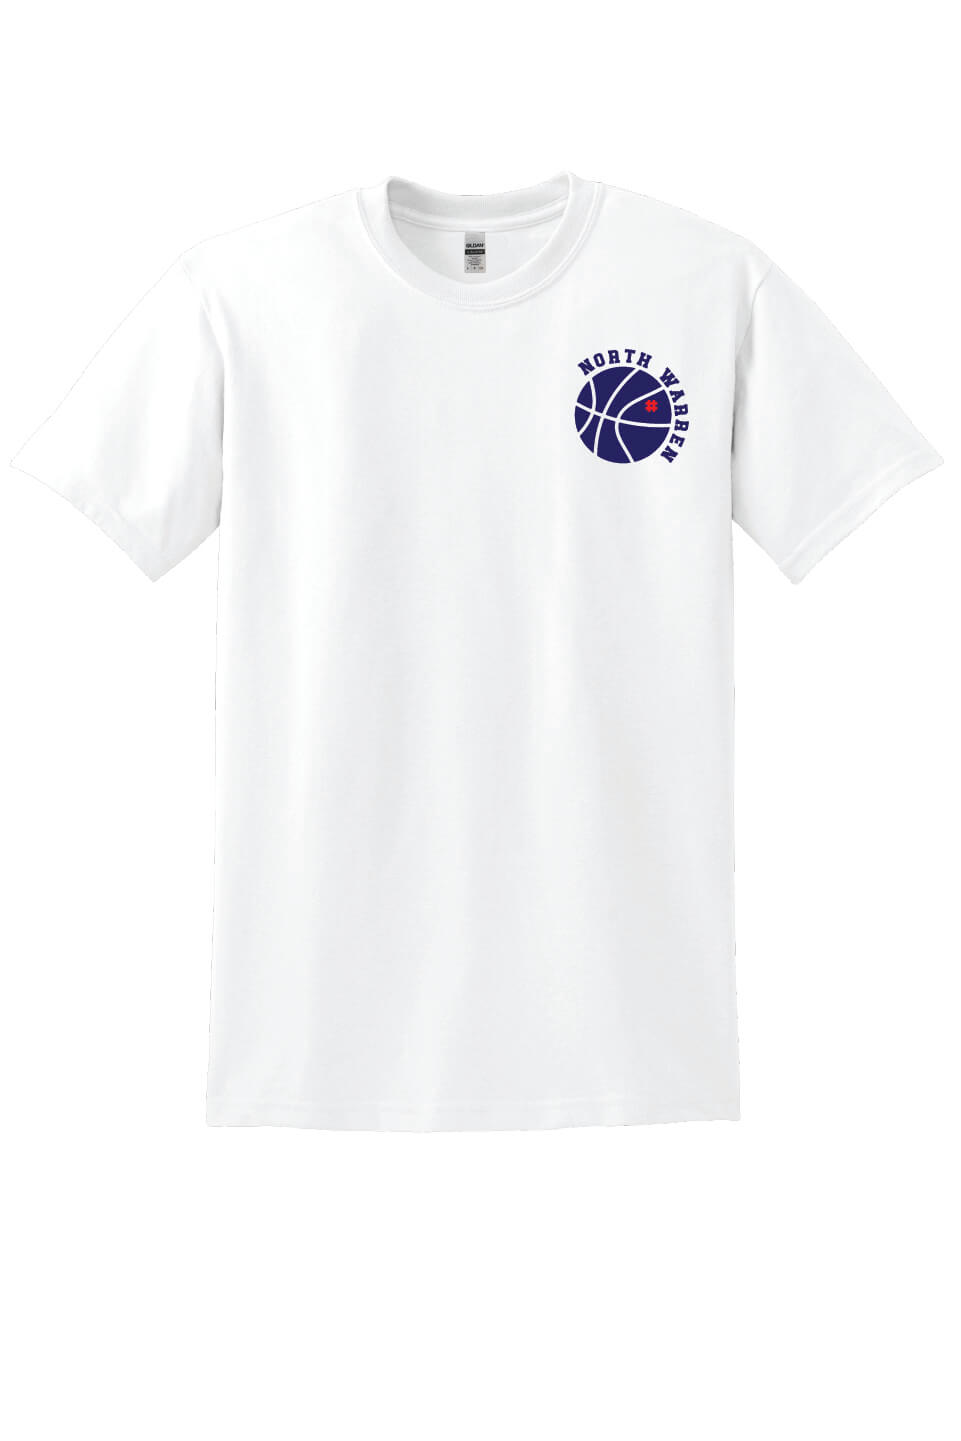 North Warren Basketball Short Sleeve T-Shirt white